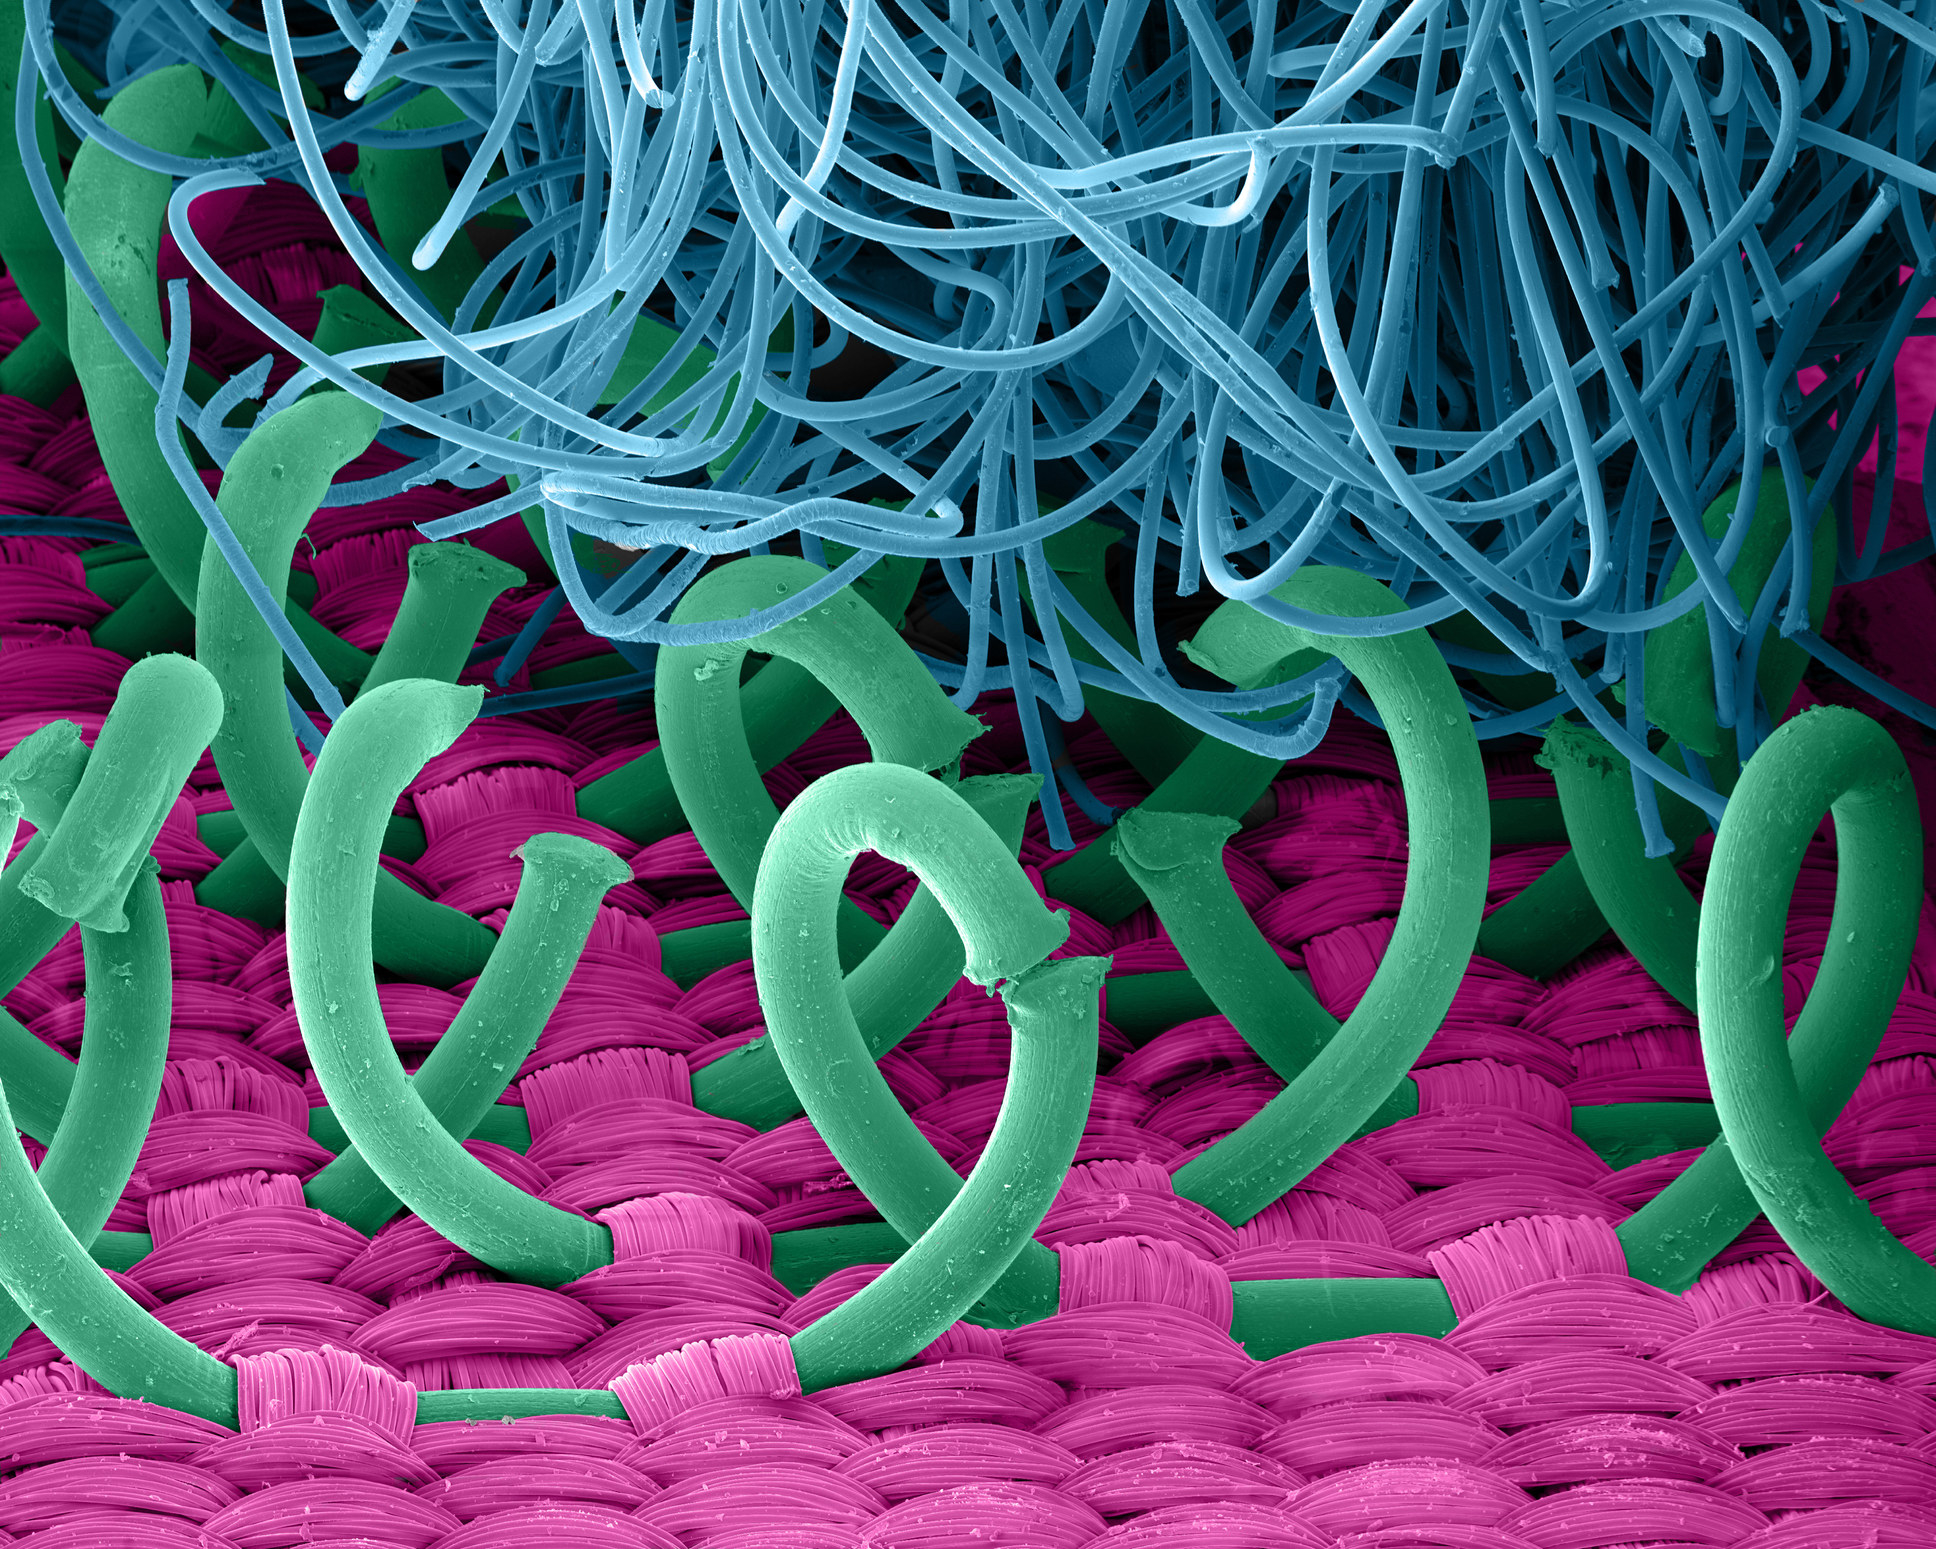 Velcro under a microscope